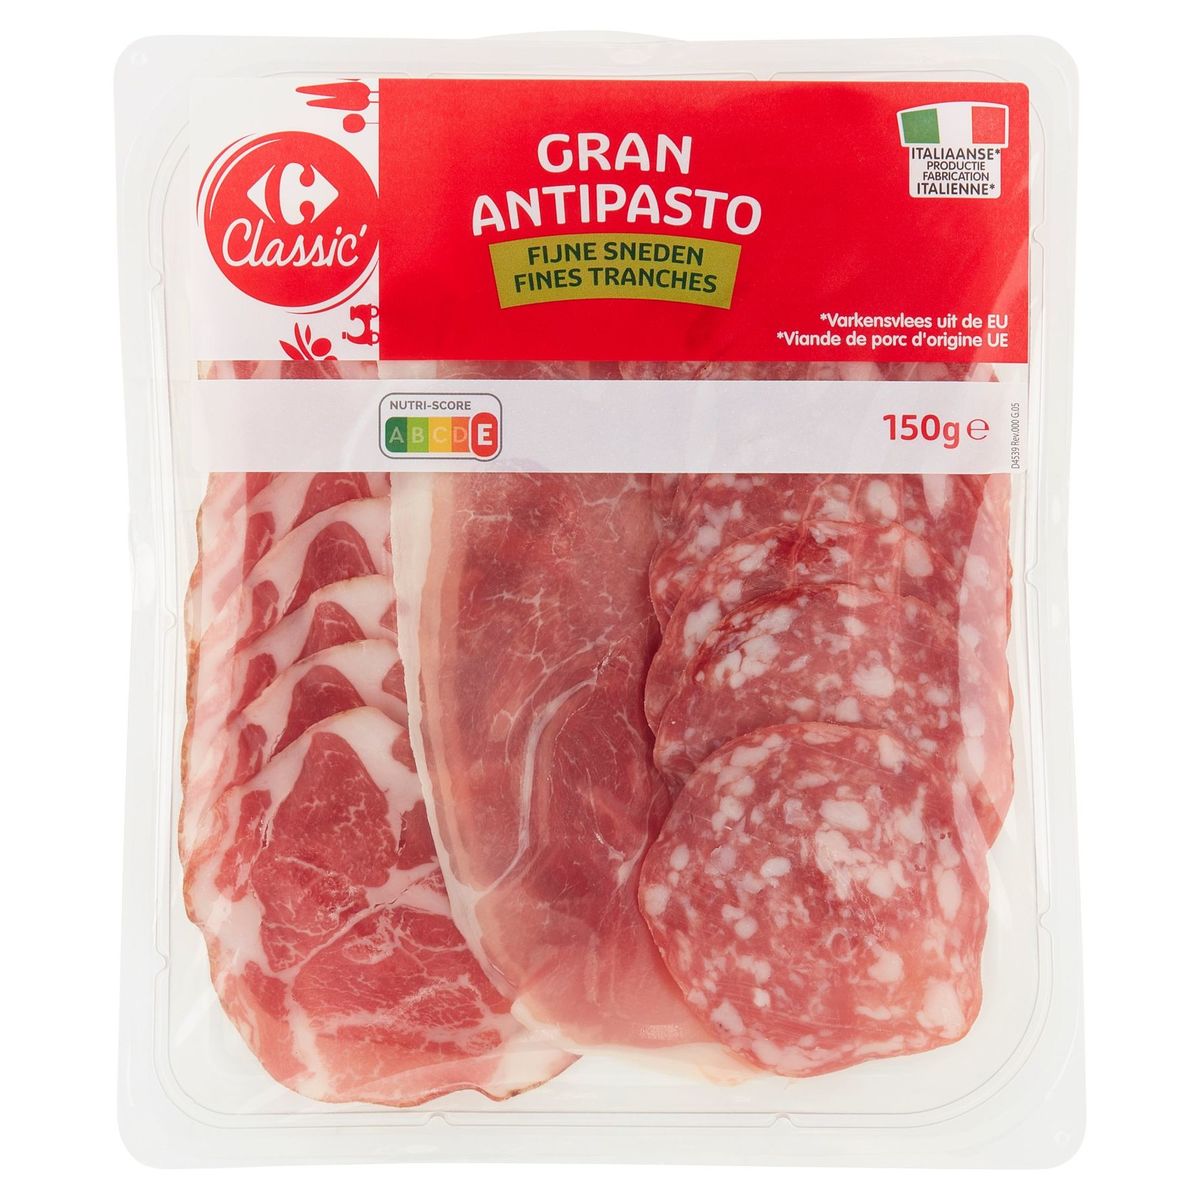 Carrefour Classic' Gran Antipasto Fijne Sneden 150 g